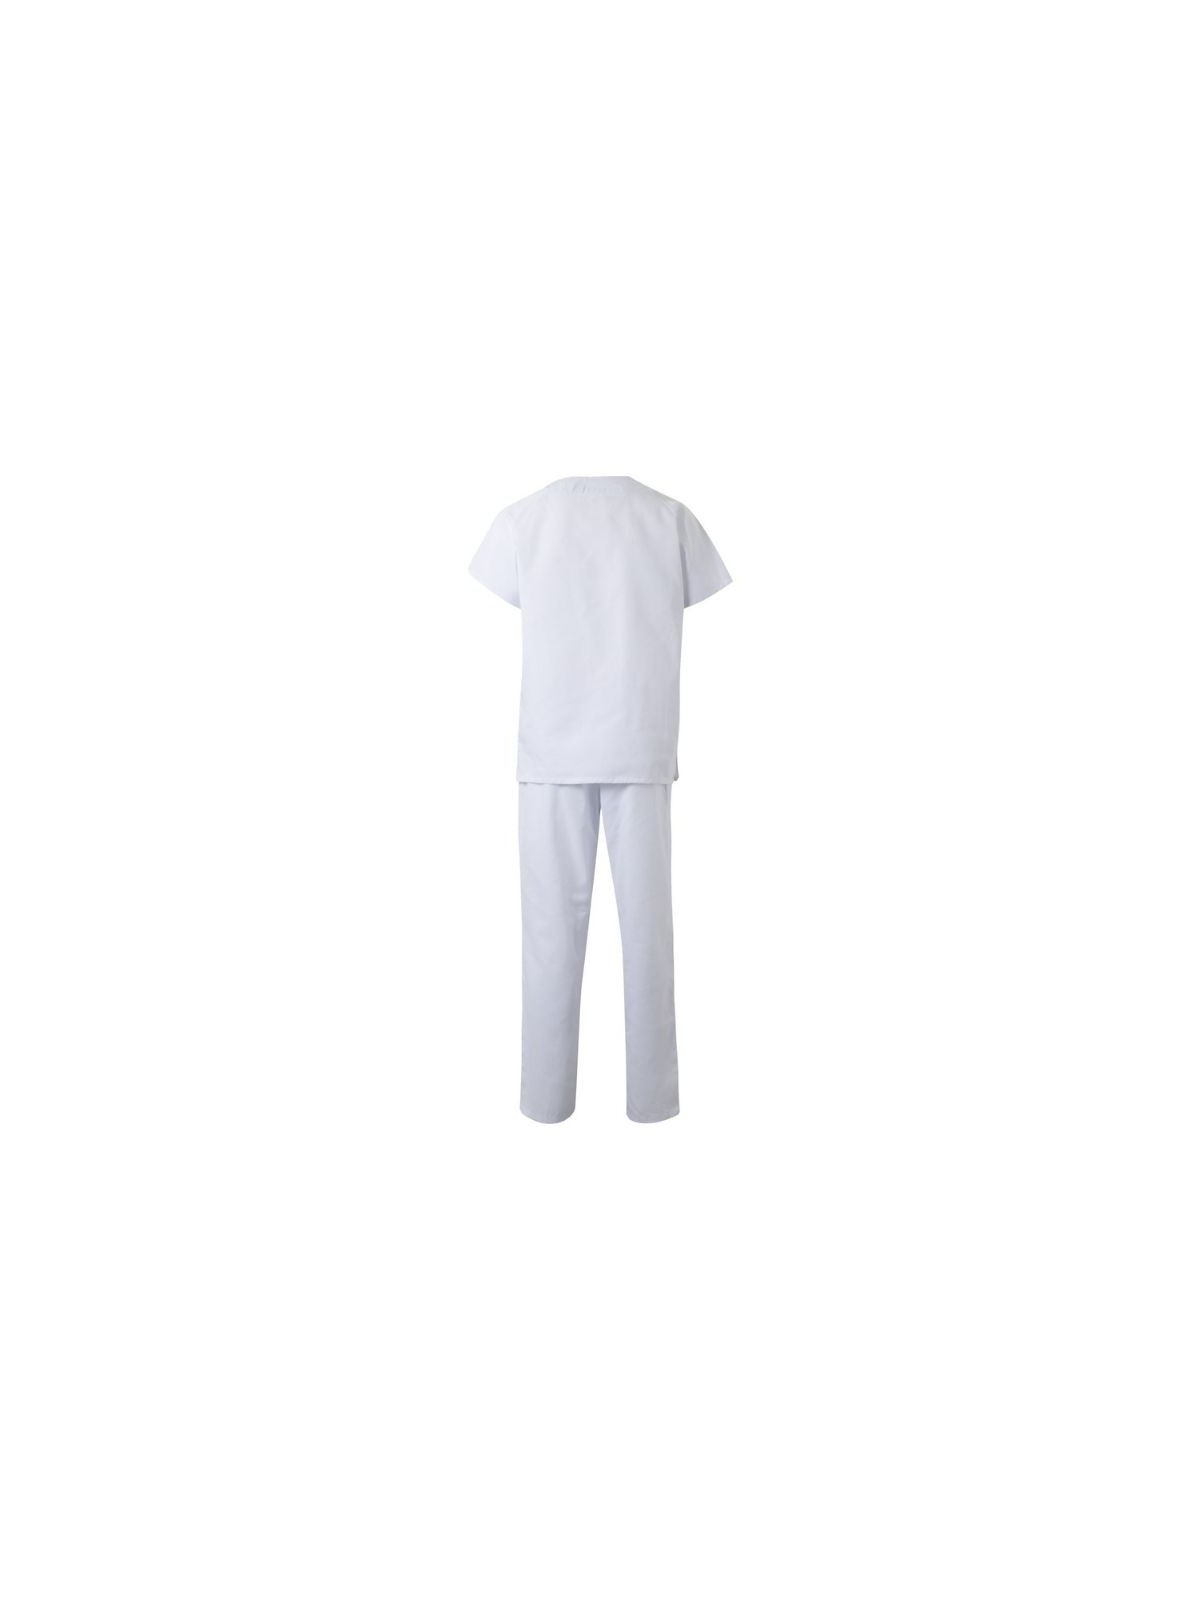 Conjunto pijama sanitario blanco